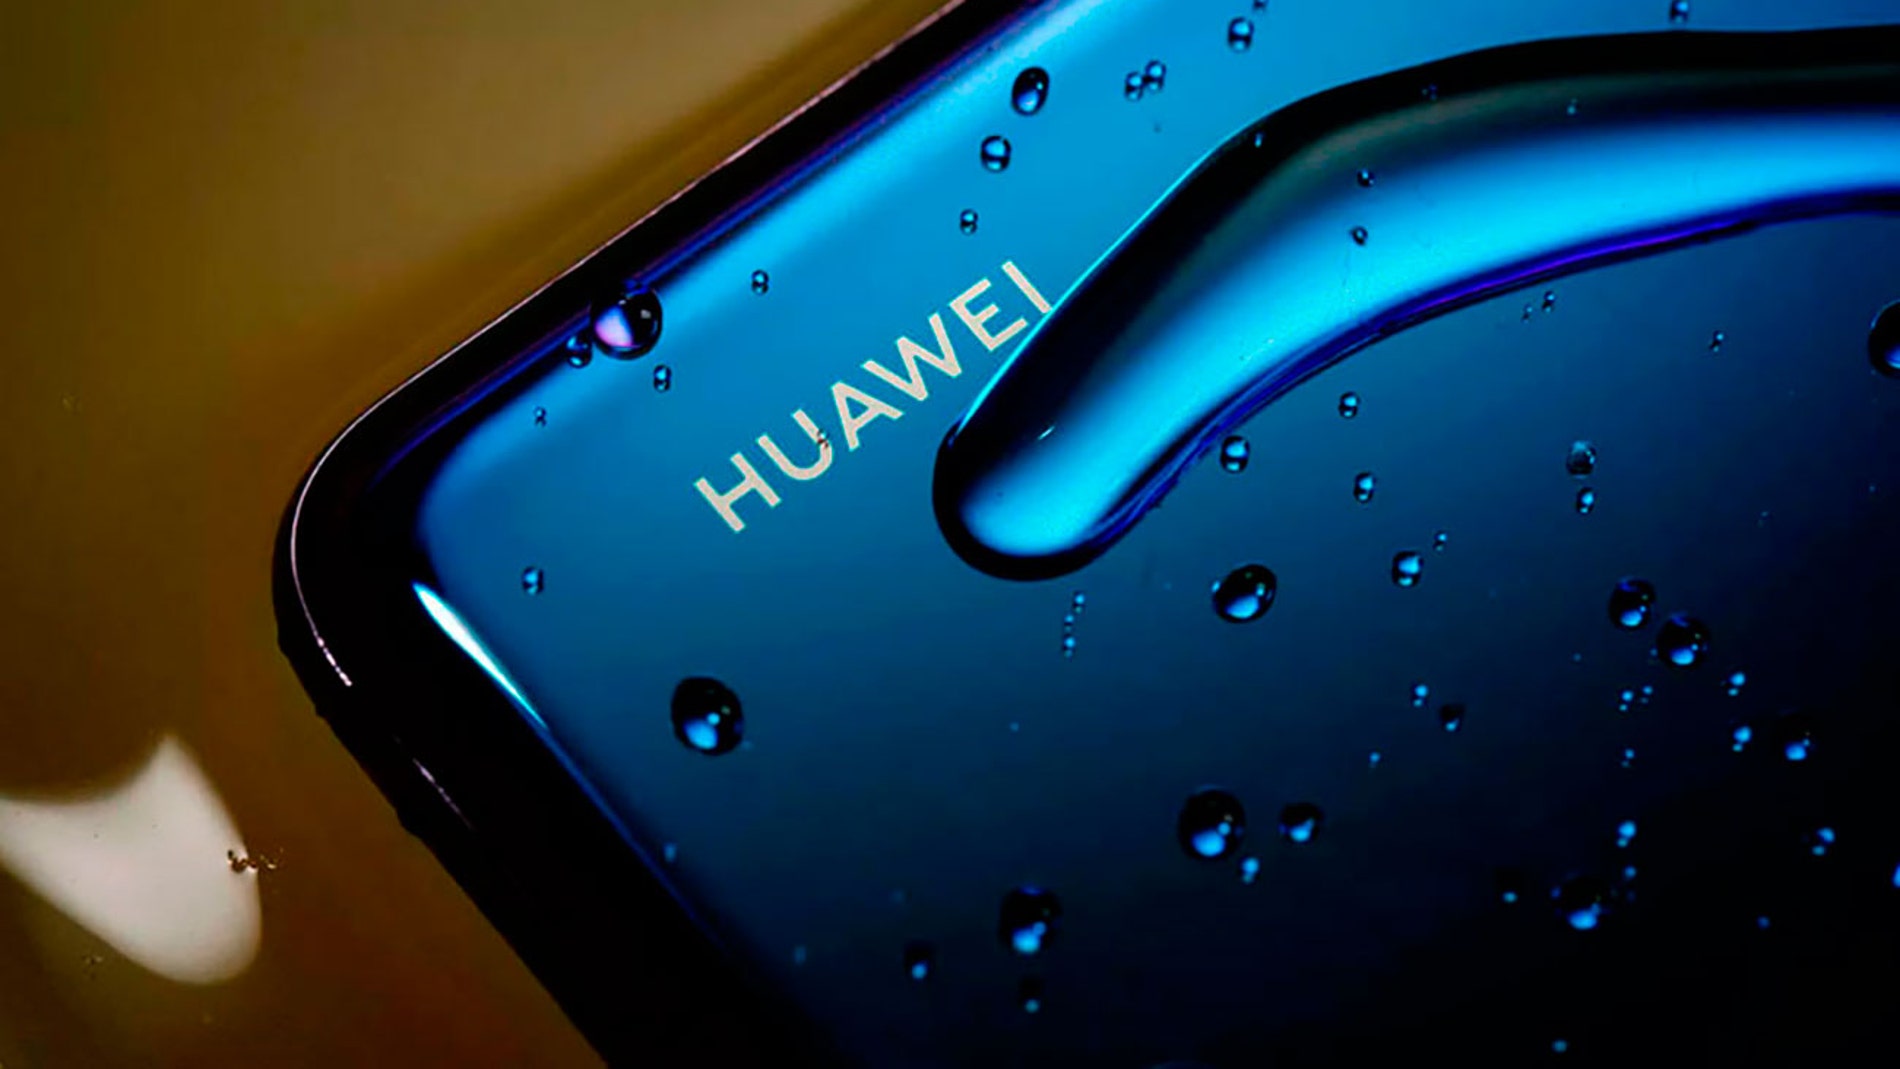 Móvil de Huawei